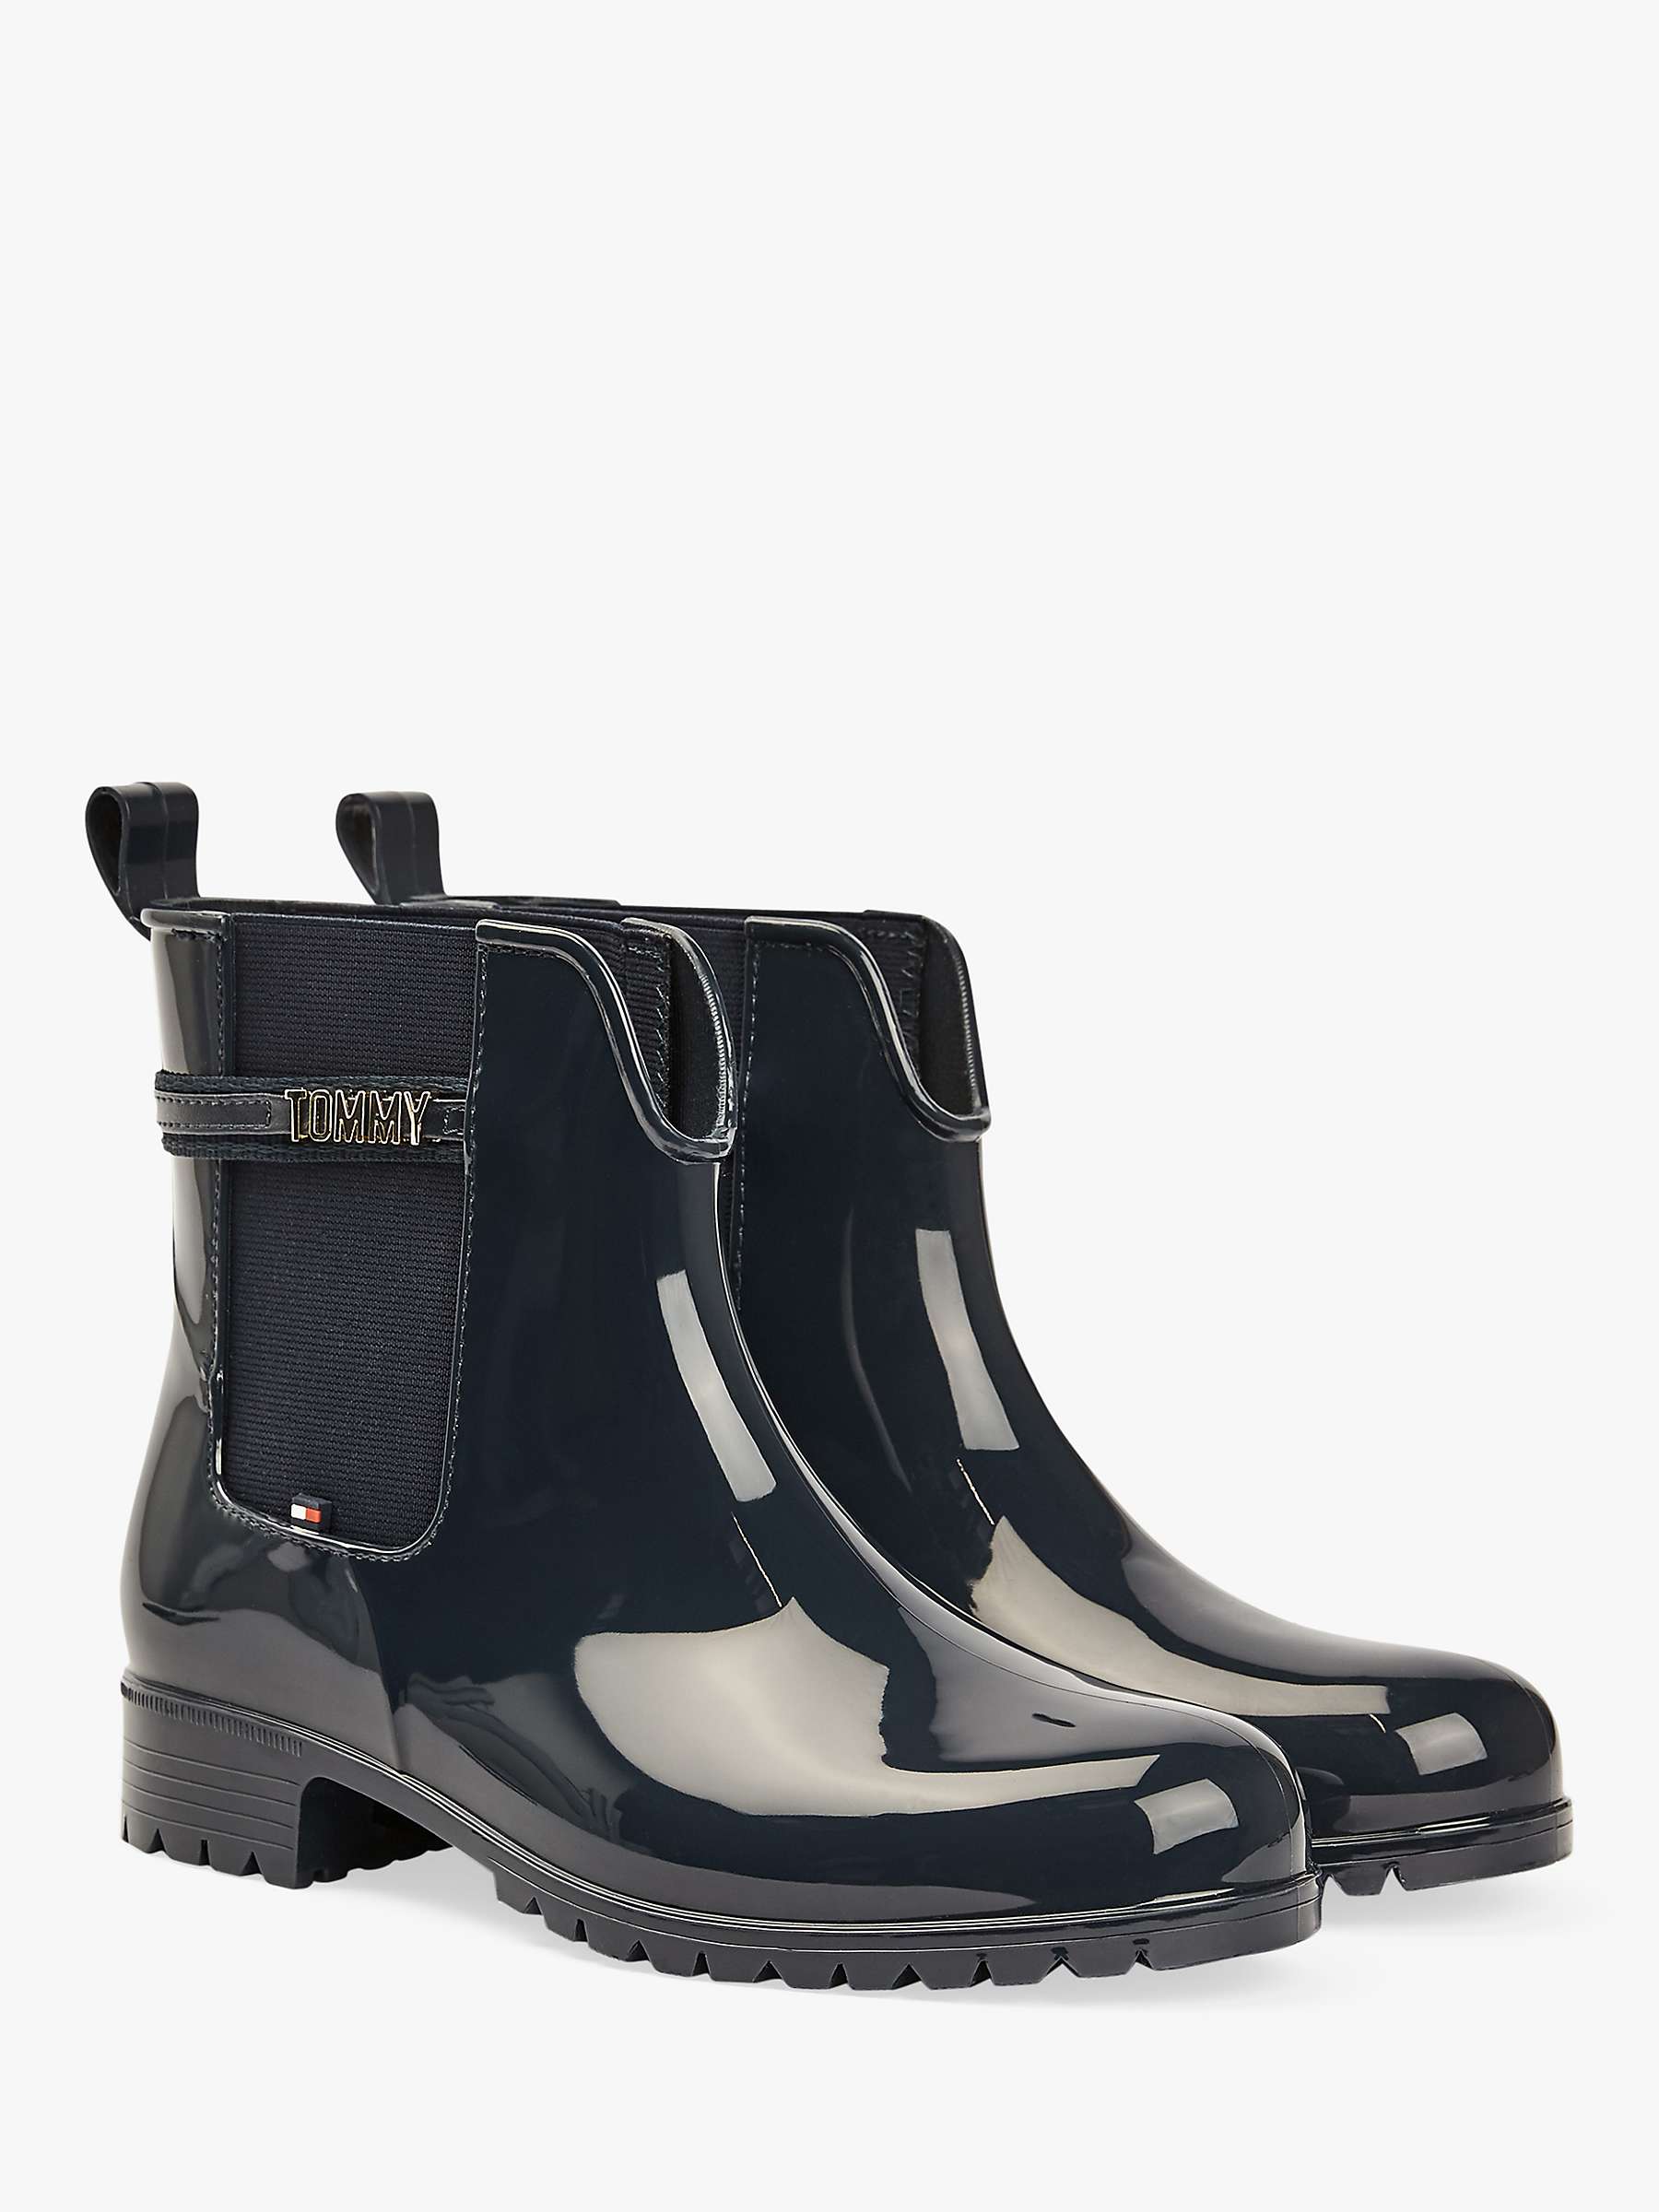 Tommy Hilfiger Logo Ankle Rain Boots, Desert Sky at John Lewis & Partners